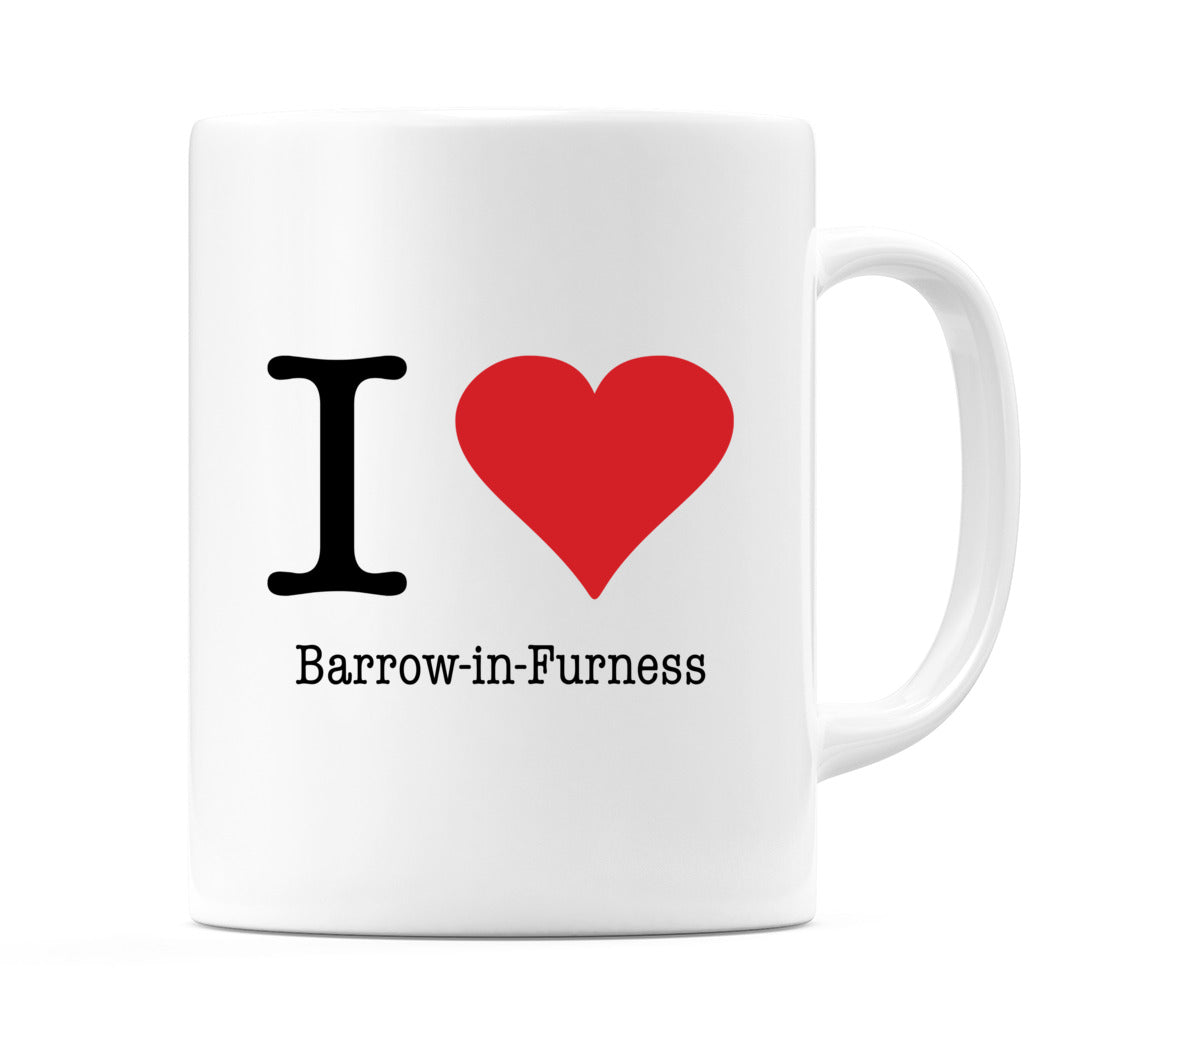 I Love Barrow-in-Furness Mug